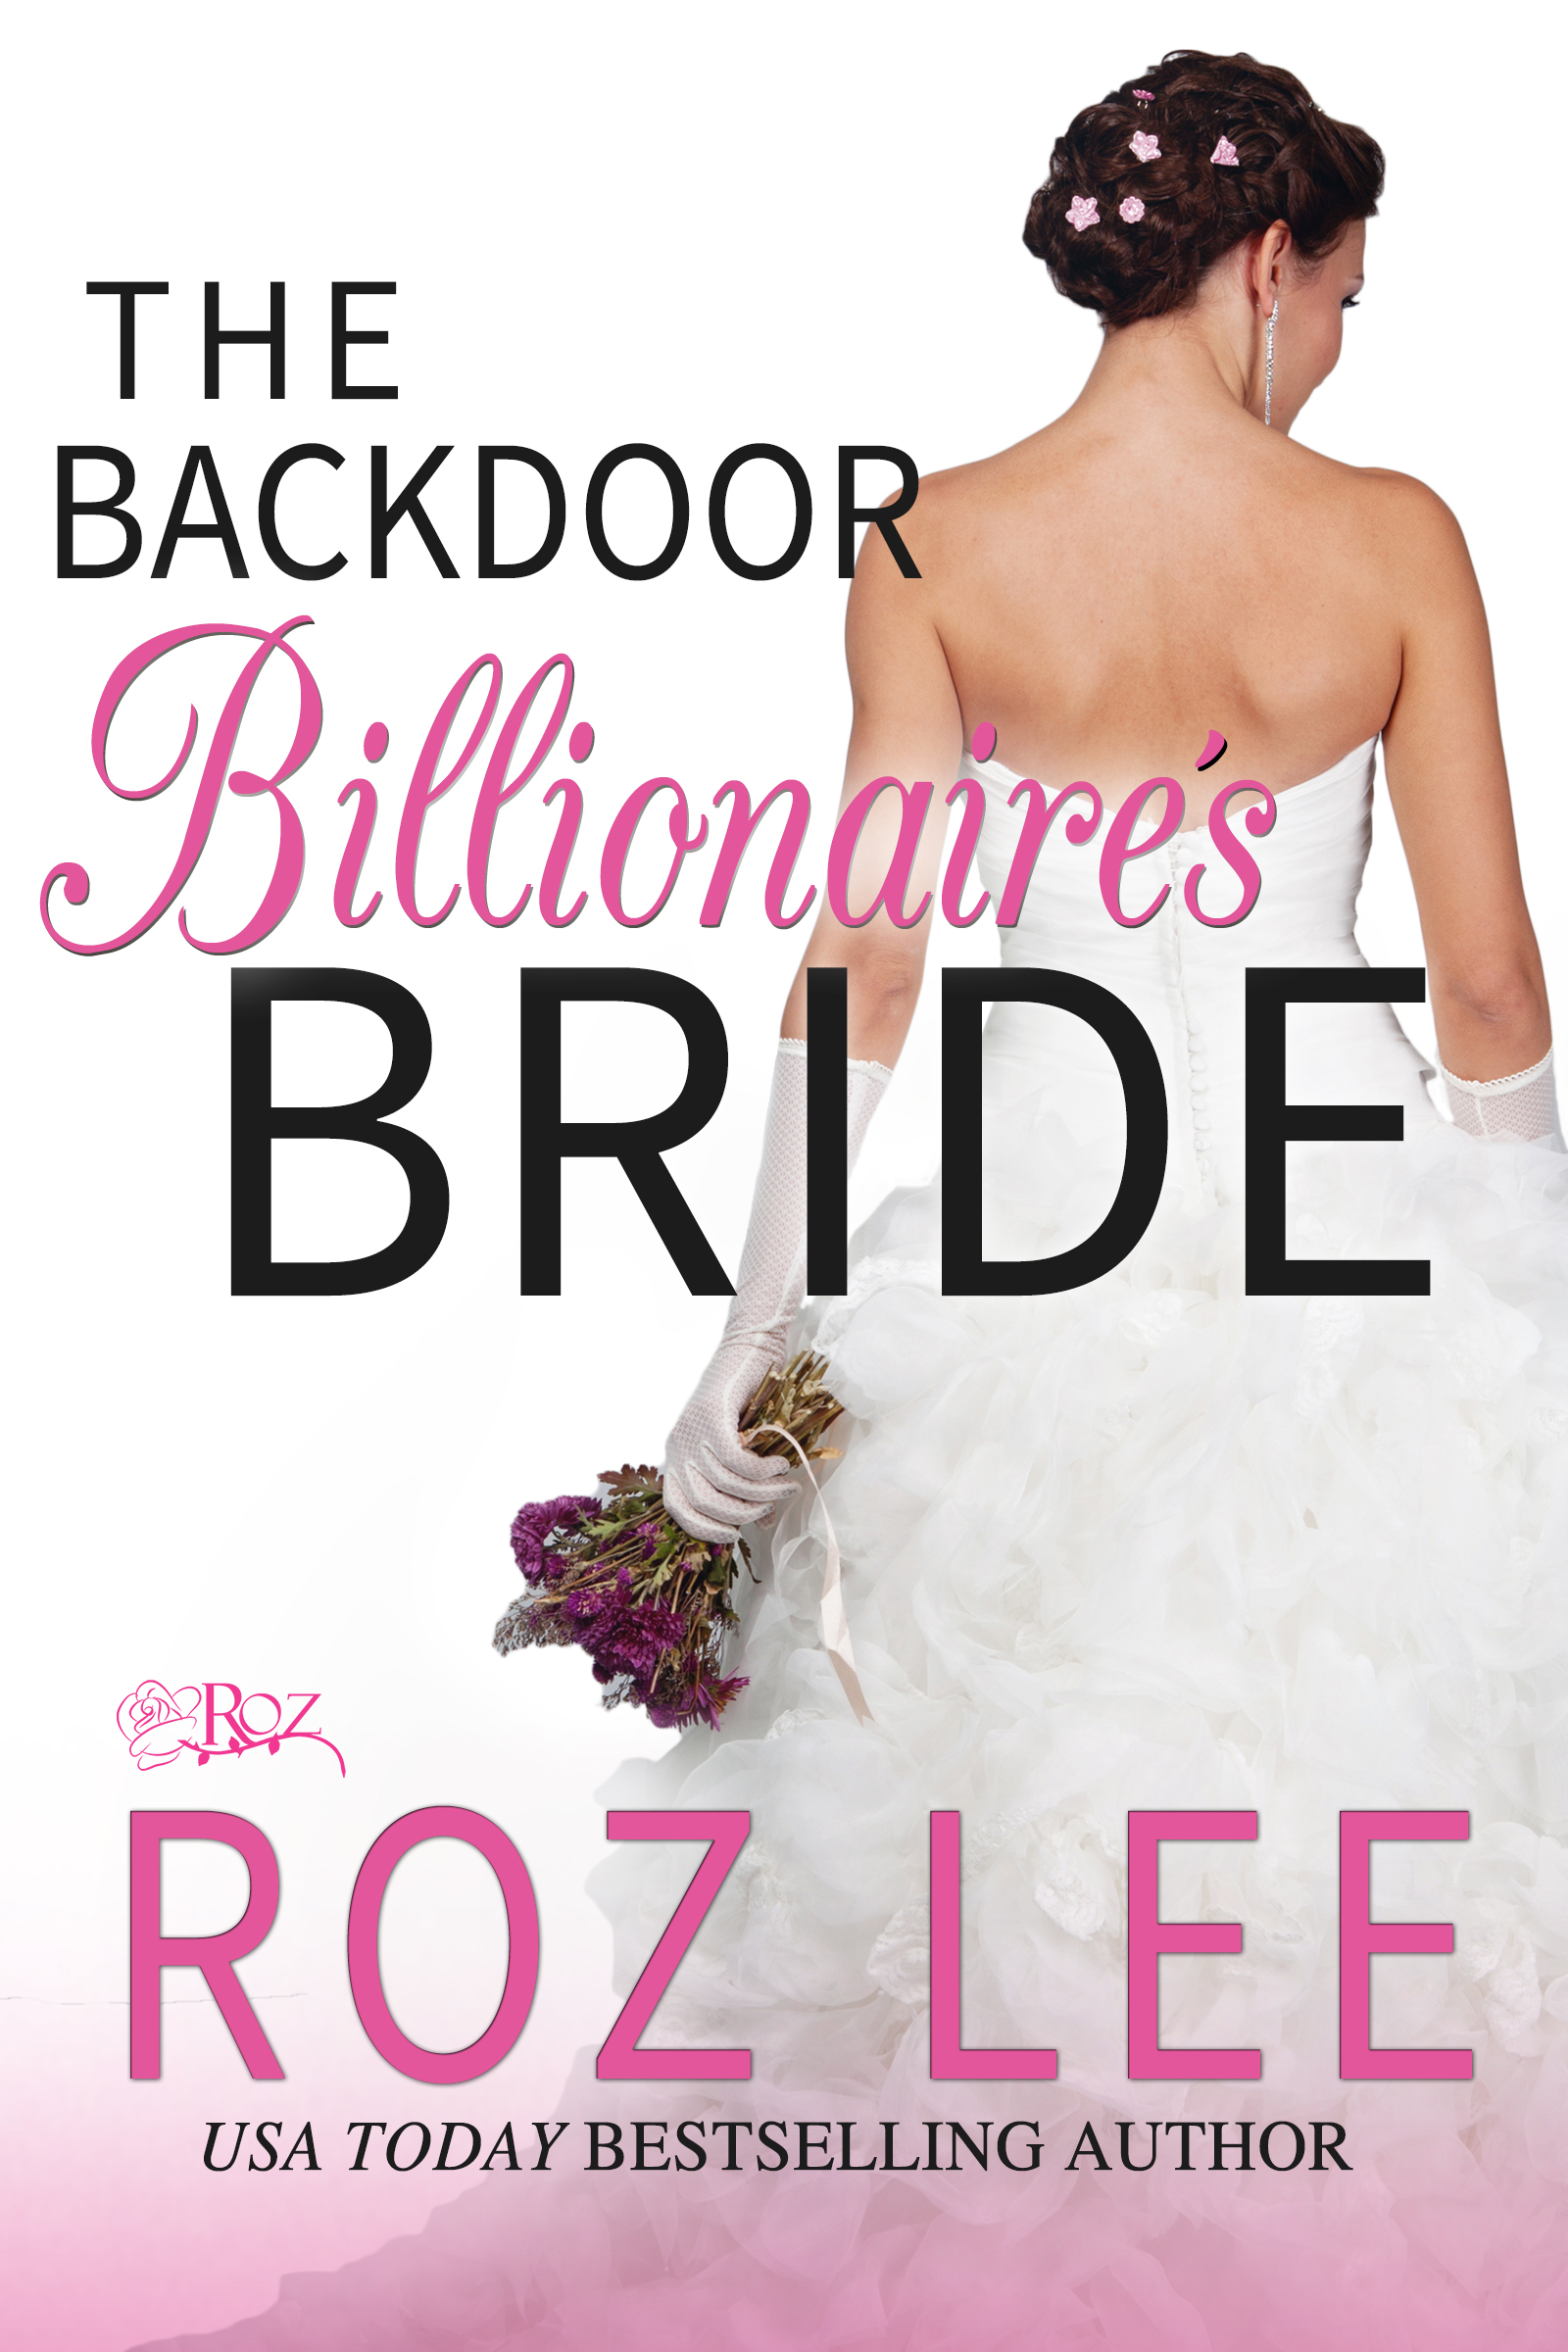  back door brides